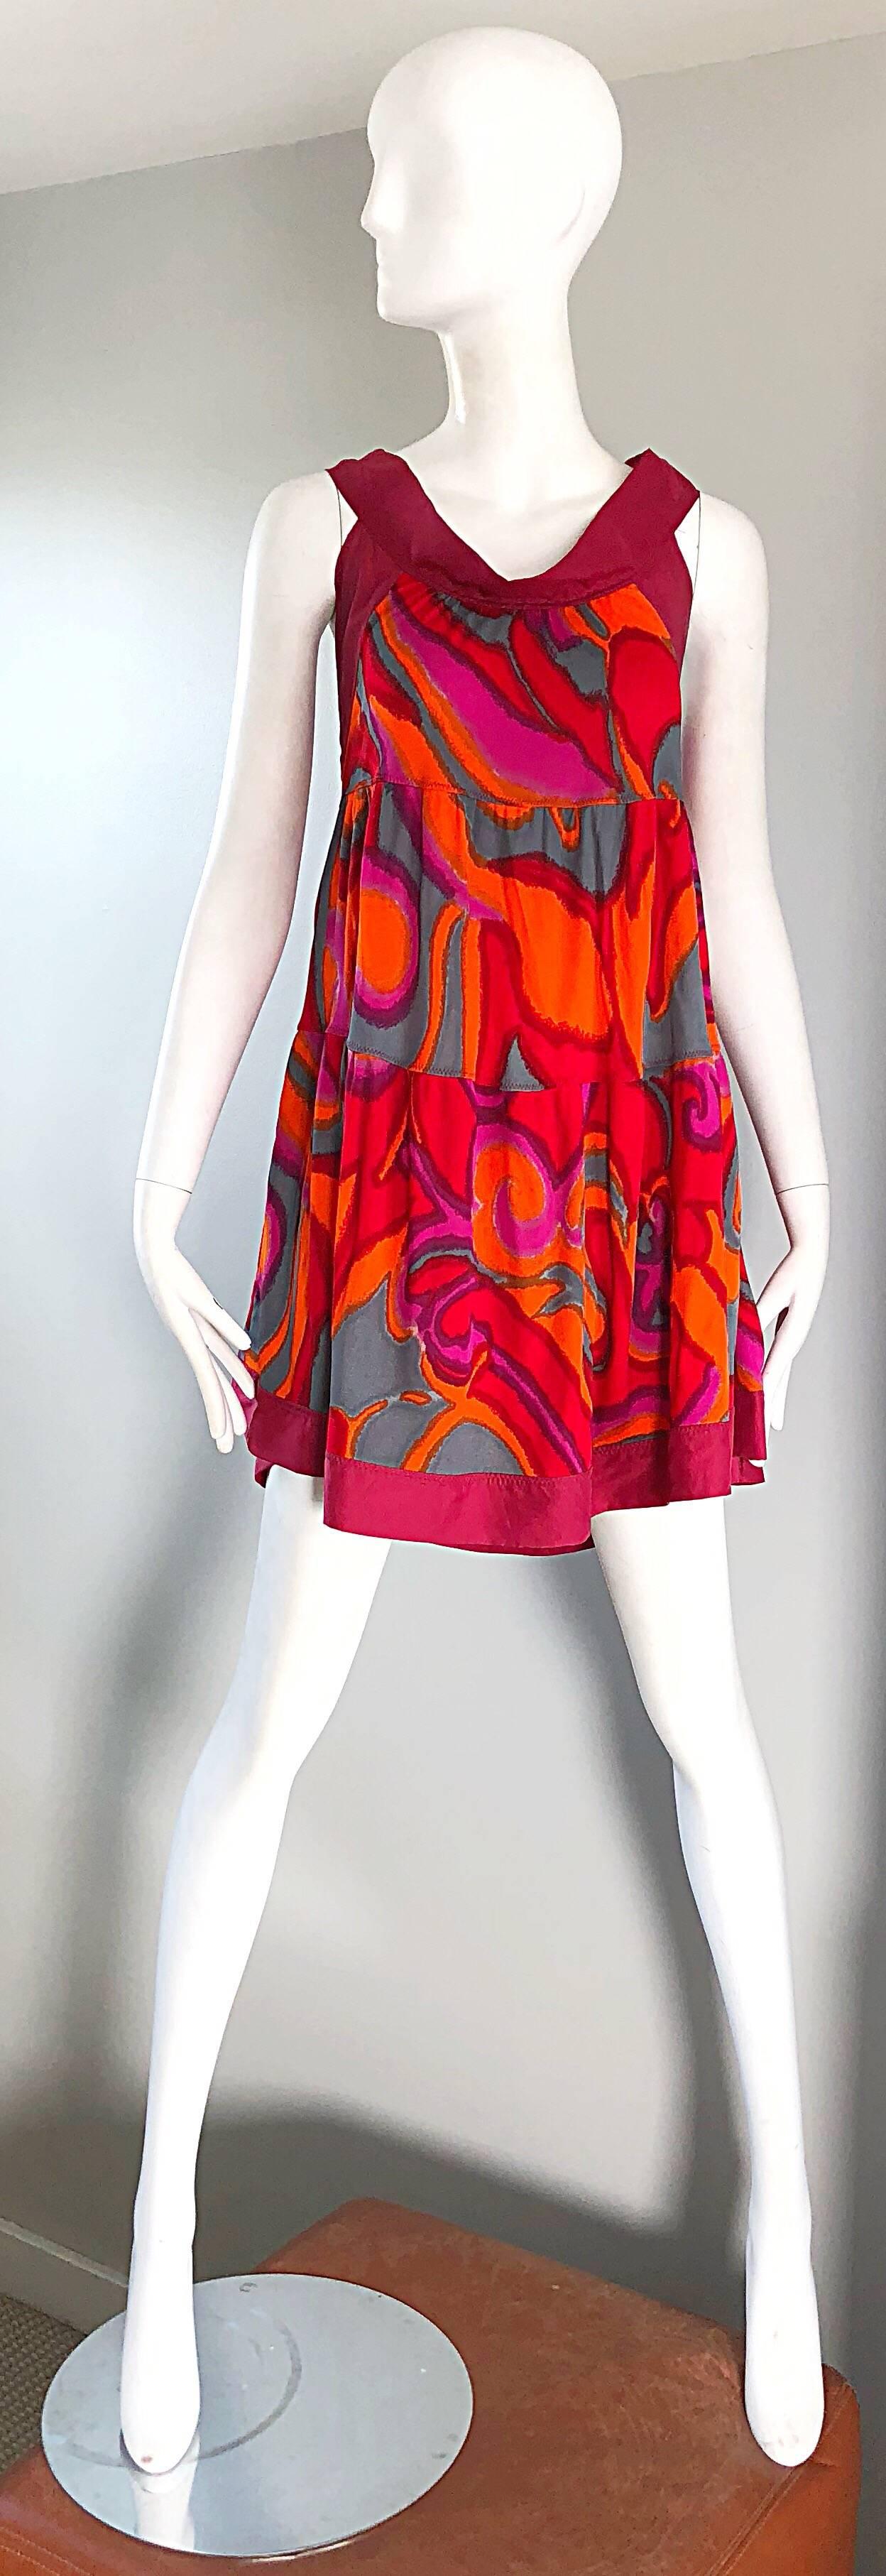 Missoni 1990s Hot Pink + Neon Orange + Gray Silk Jersey Vintage Trapeze Dress 4